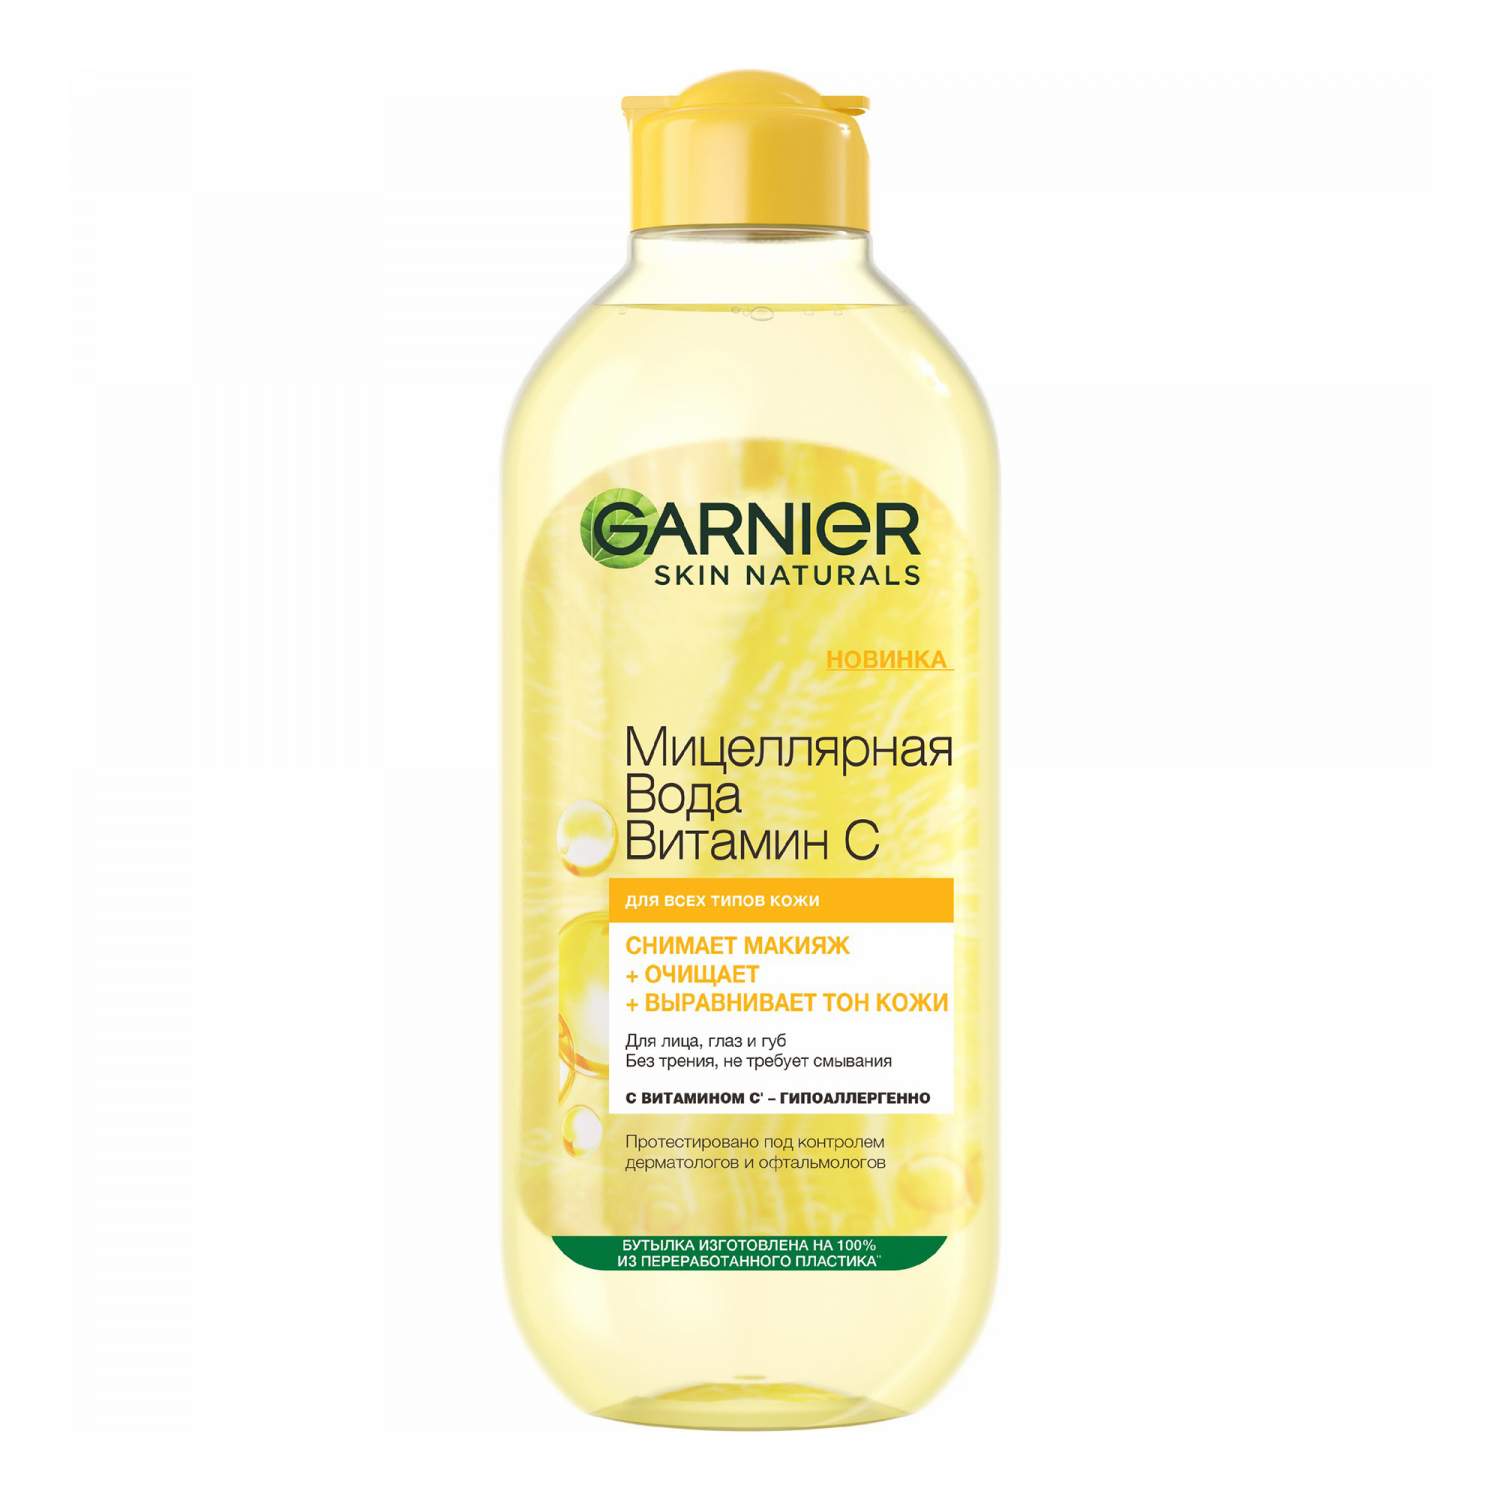 Garnier Skin Naturals Express средство для снятия макияжа с глаз 2 в 1 (125 мл)